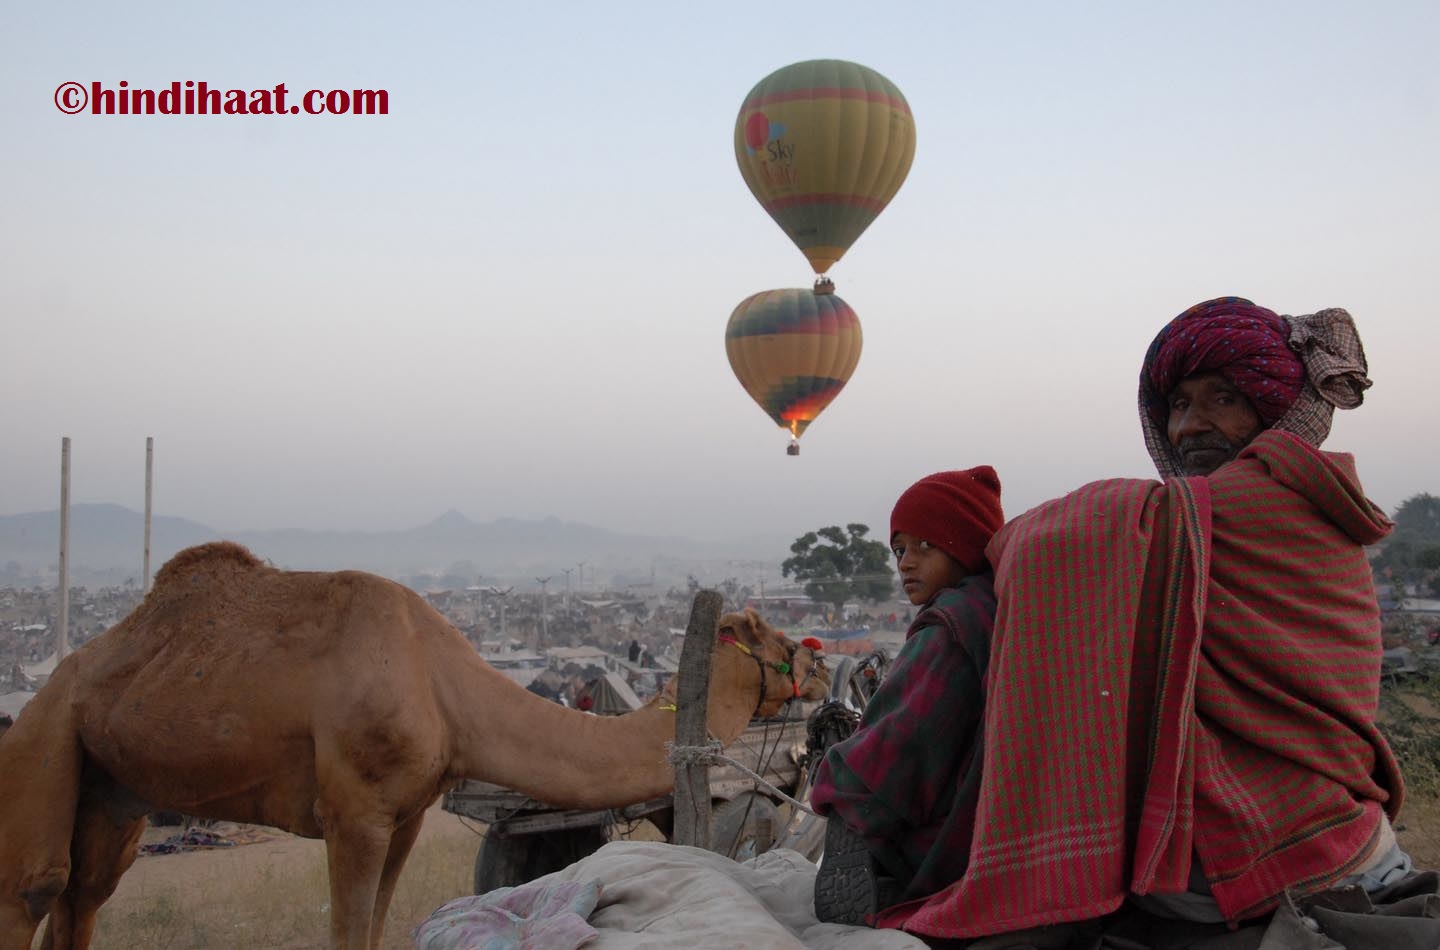 राजस्थान के पशु मेले Cattle fairs of Rajasthan - Hindihaat